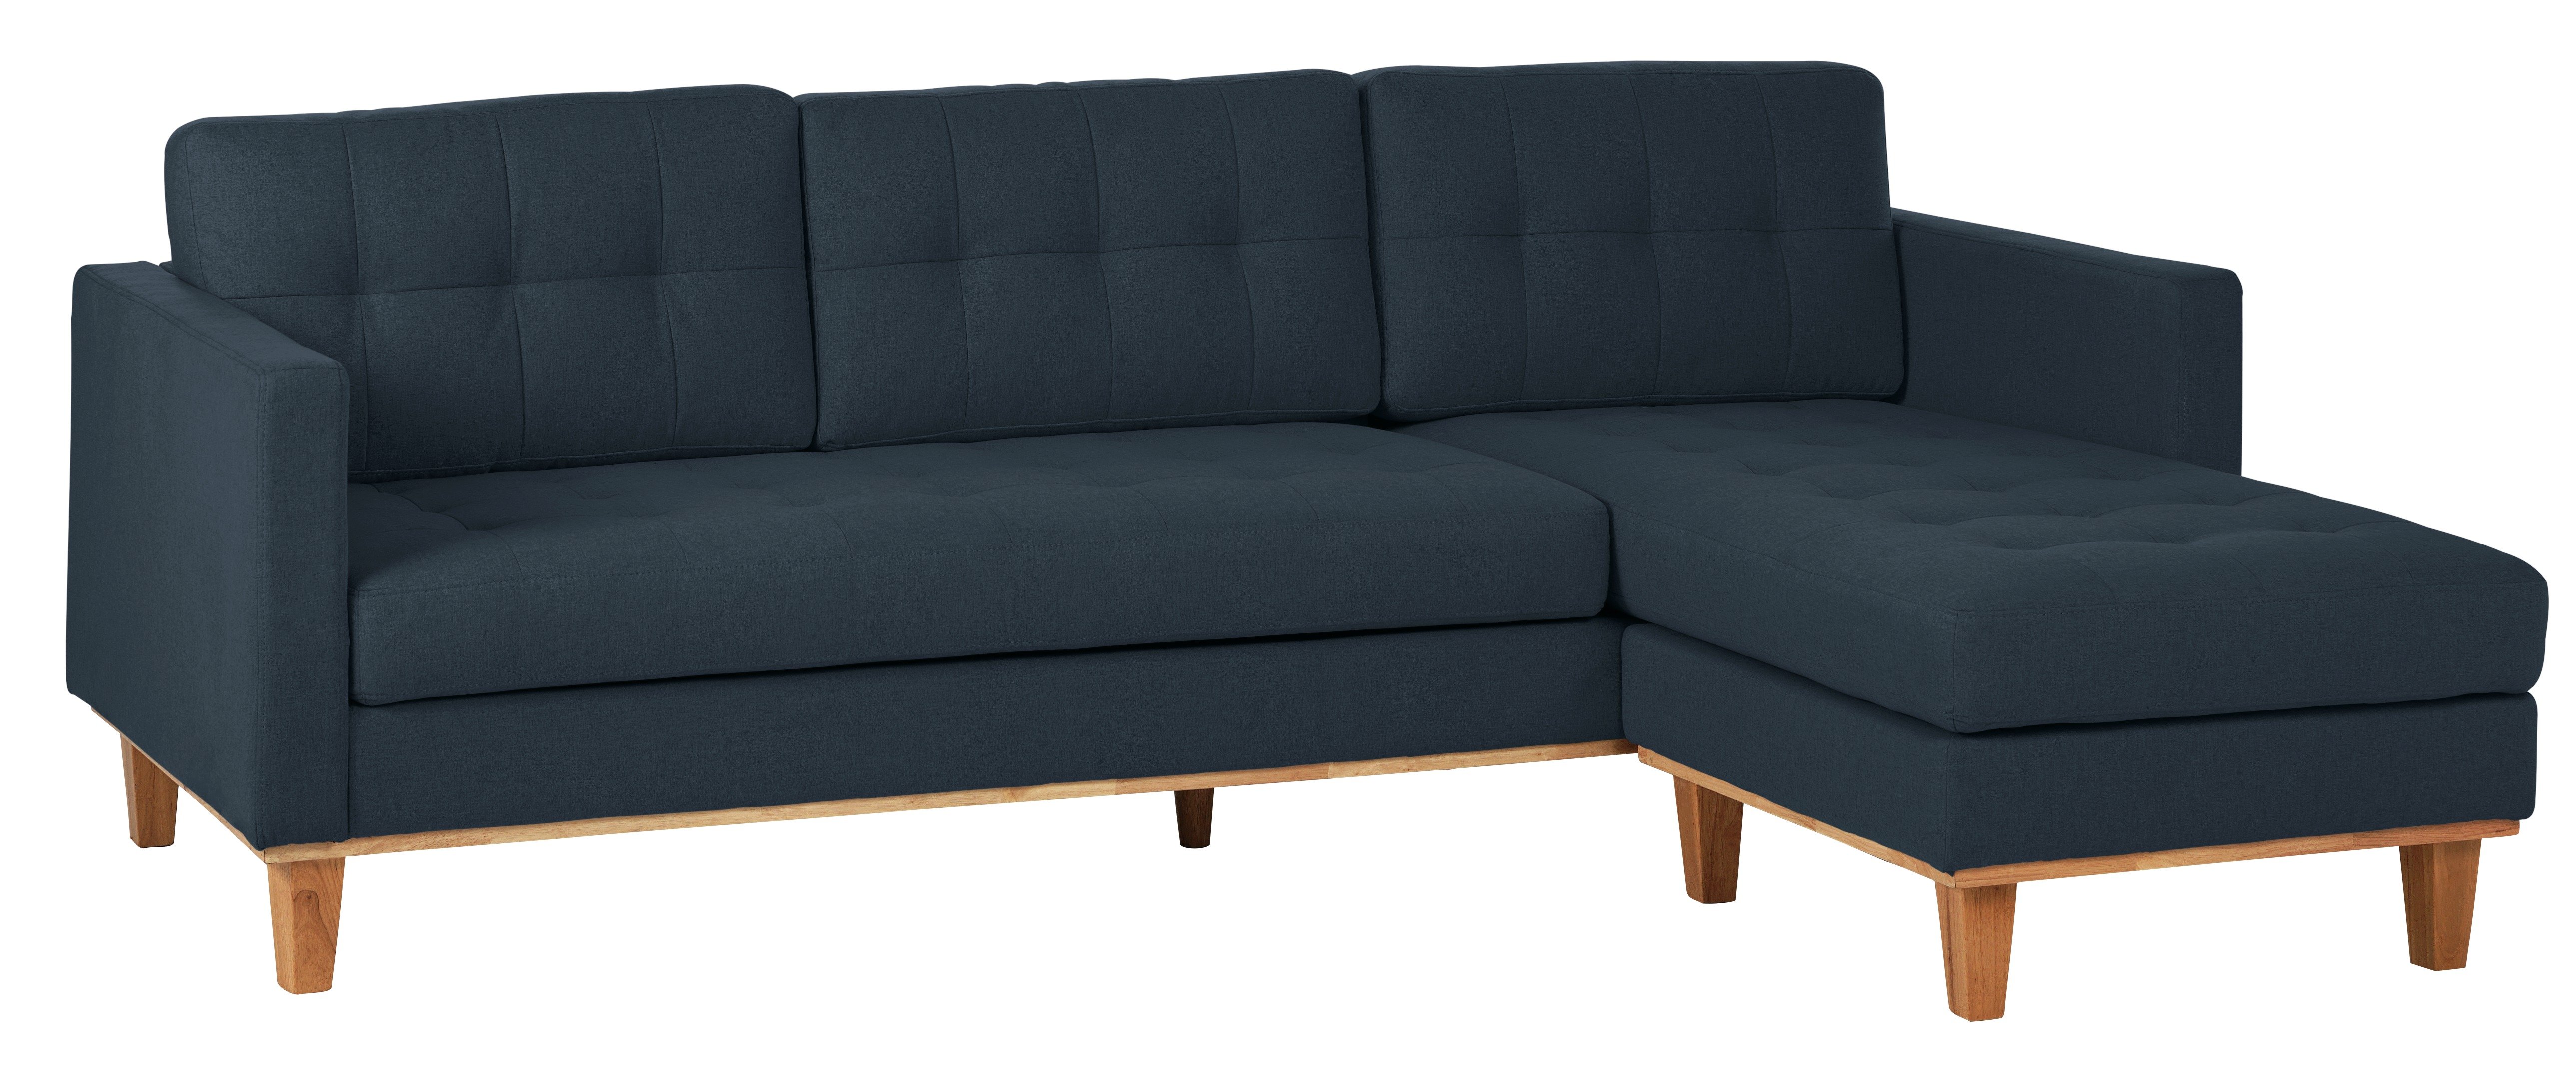 Hygena - Aliso Reversible Corner Chaise Sofa